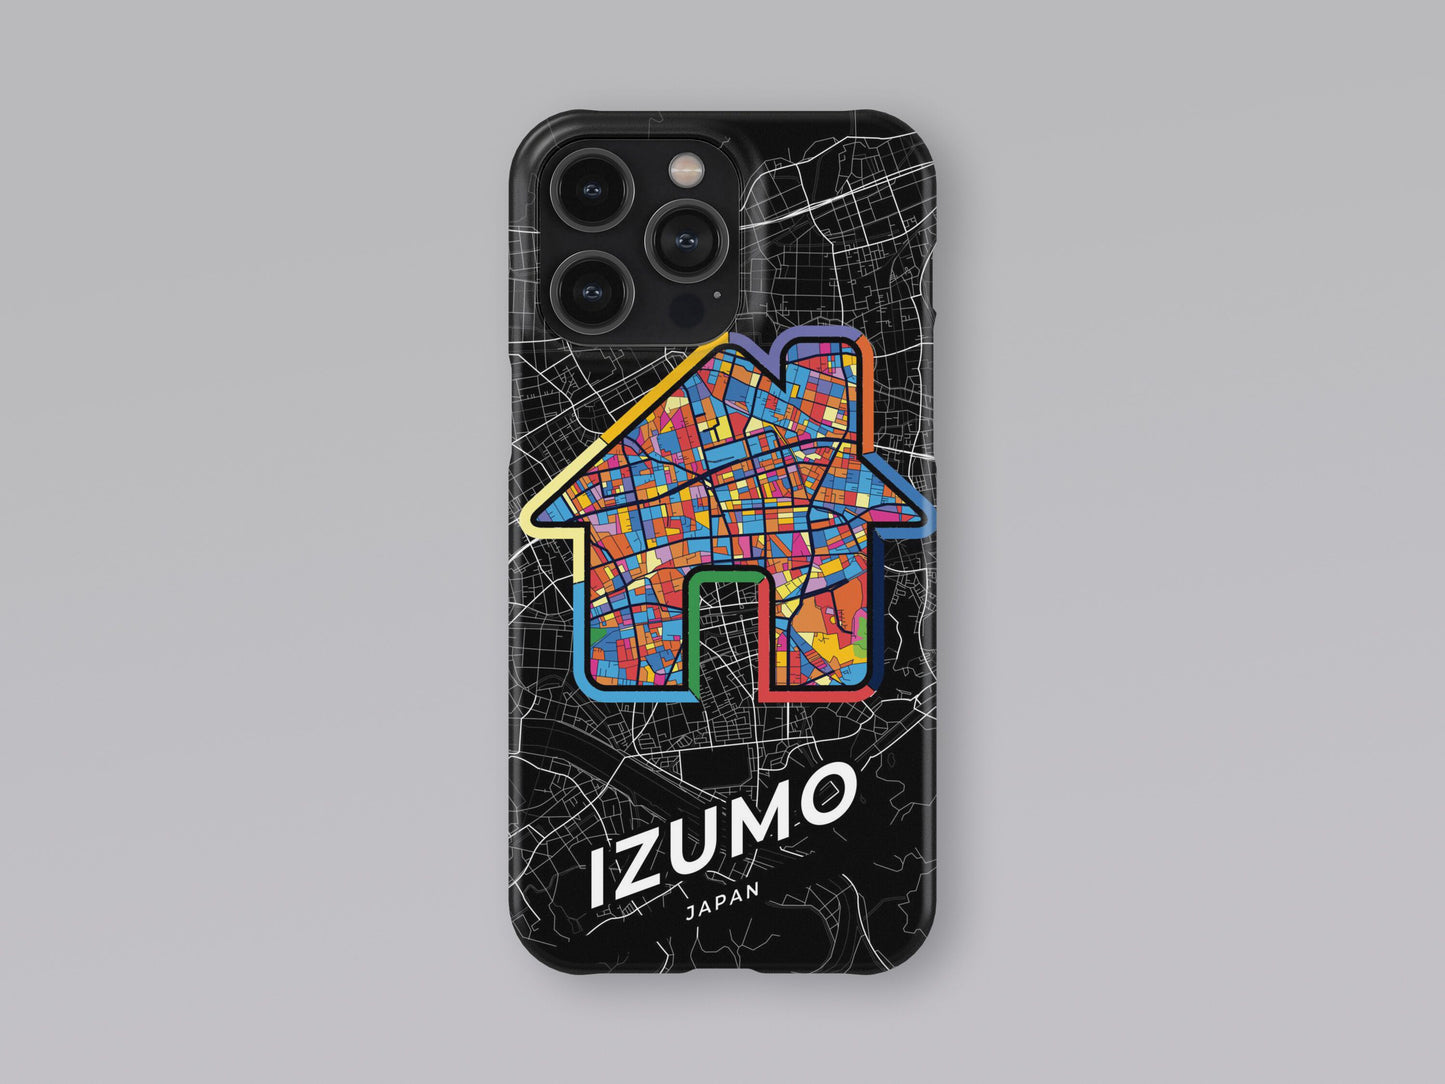 Izumo Japan slim phone case with colorful icon. Birthday, wedding or housewarming gift. Couple match cases. 3